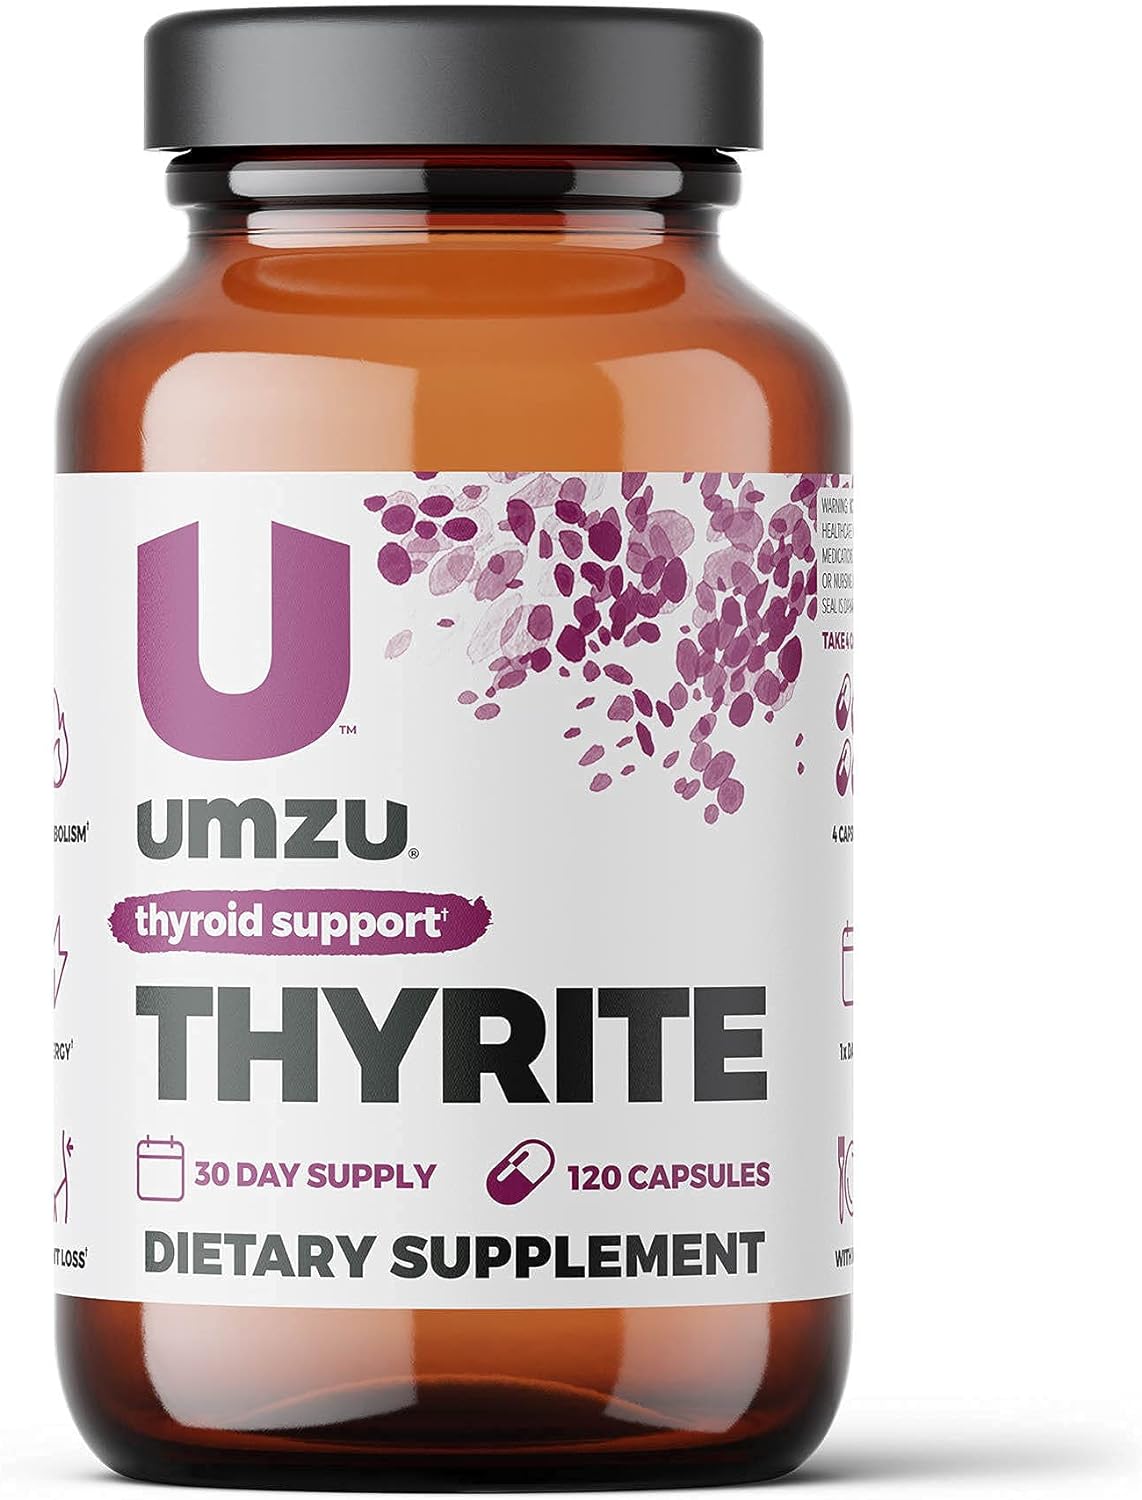 UMZU Thyrite - Thyroid Support Supplement to Support Healthy Thyroid a10.7 Ounces